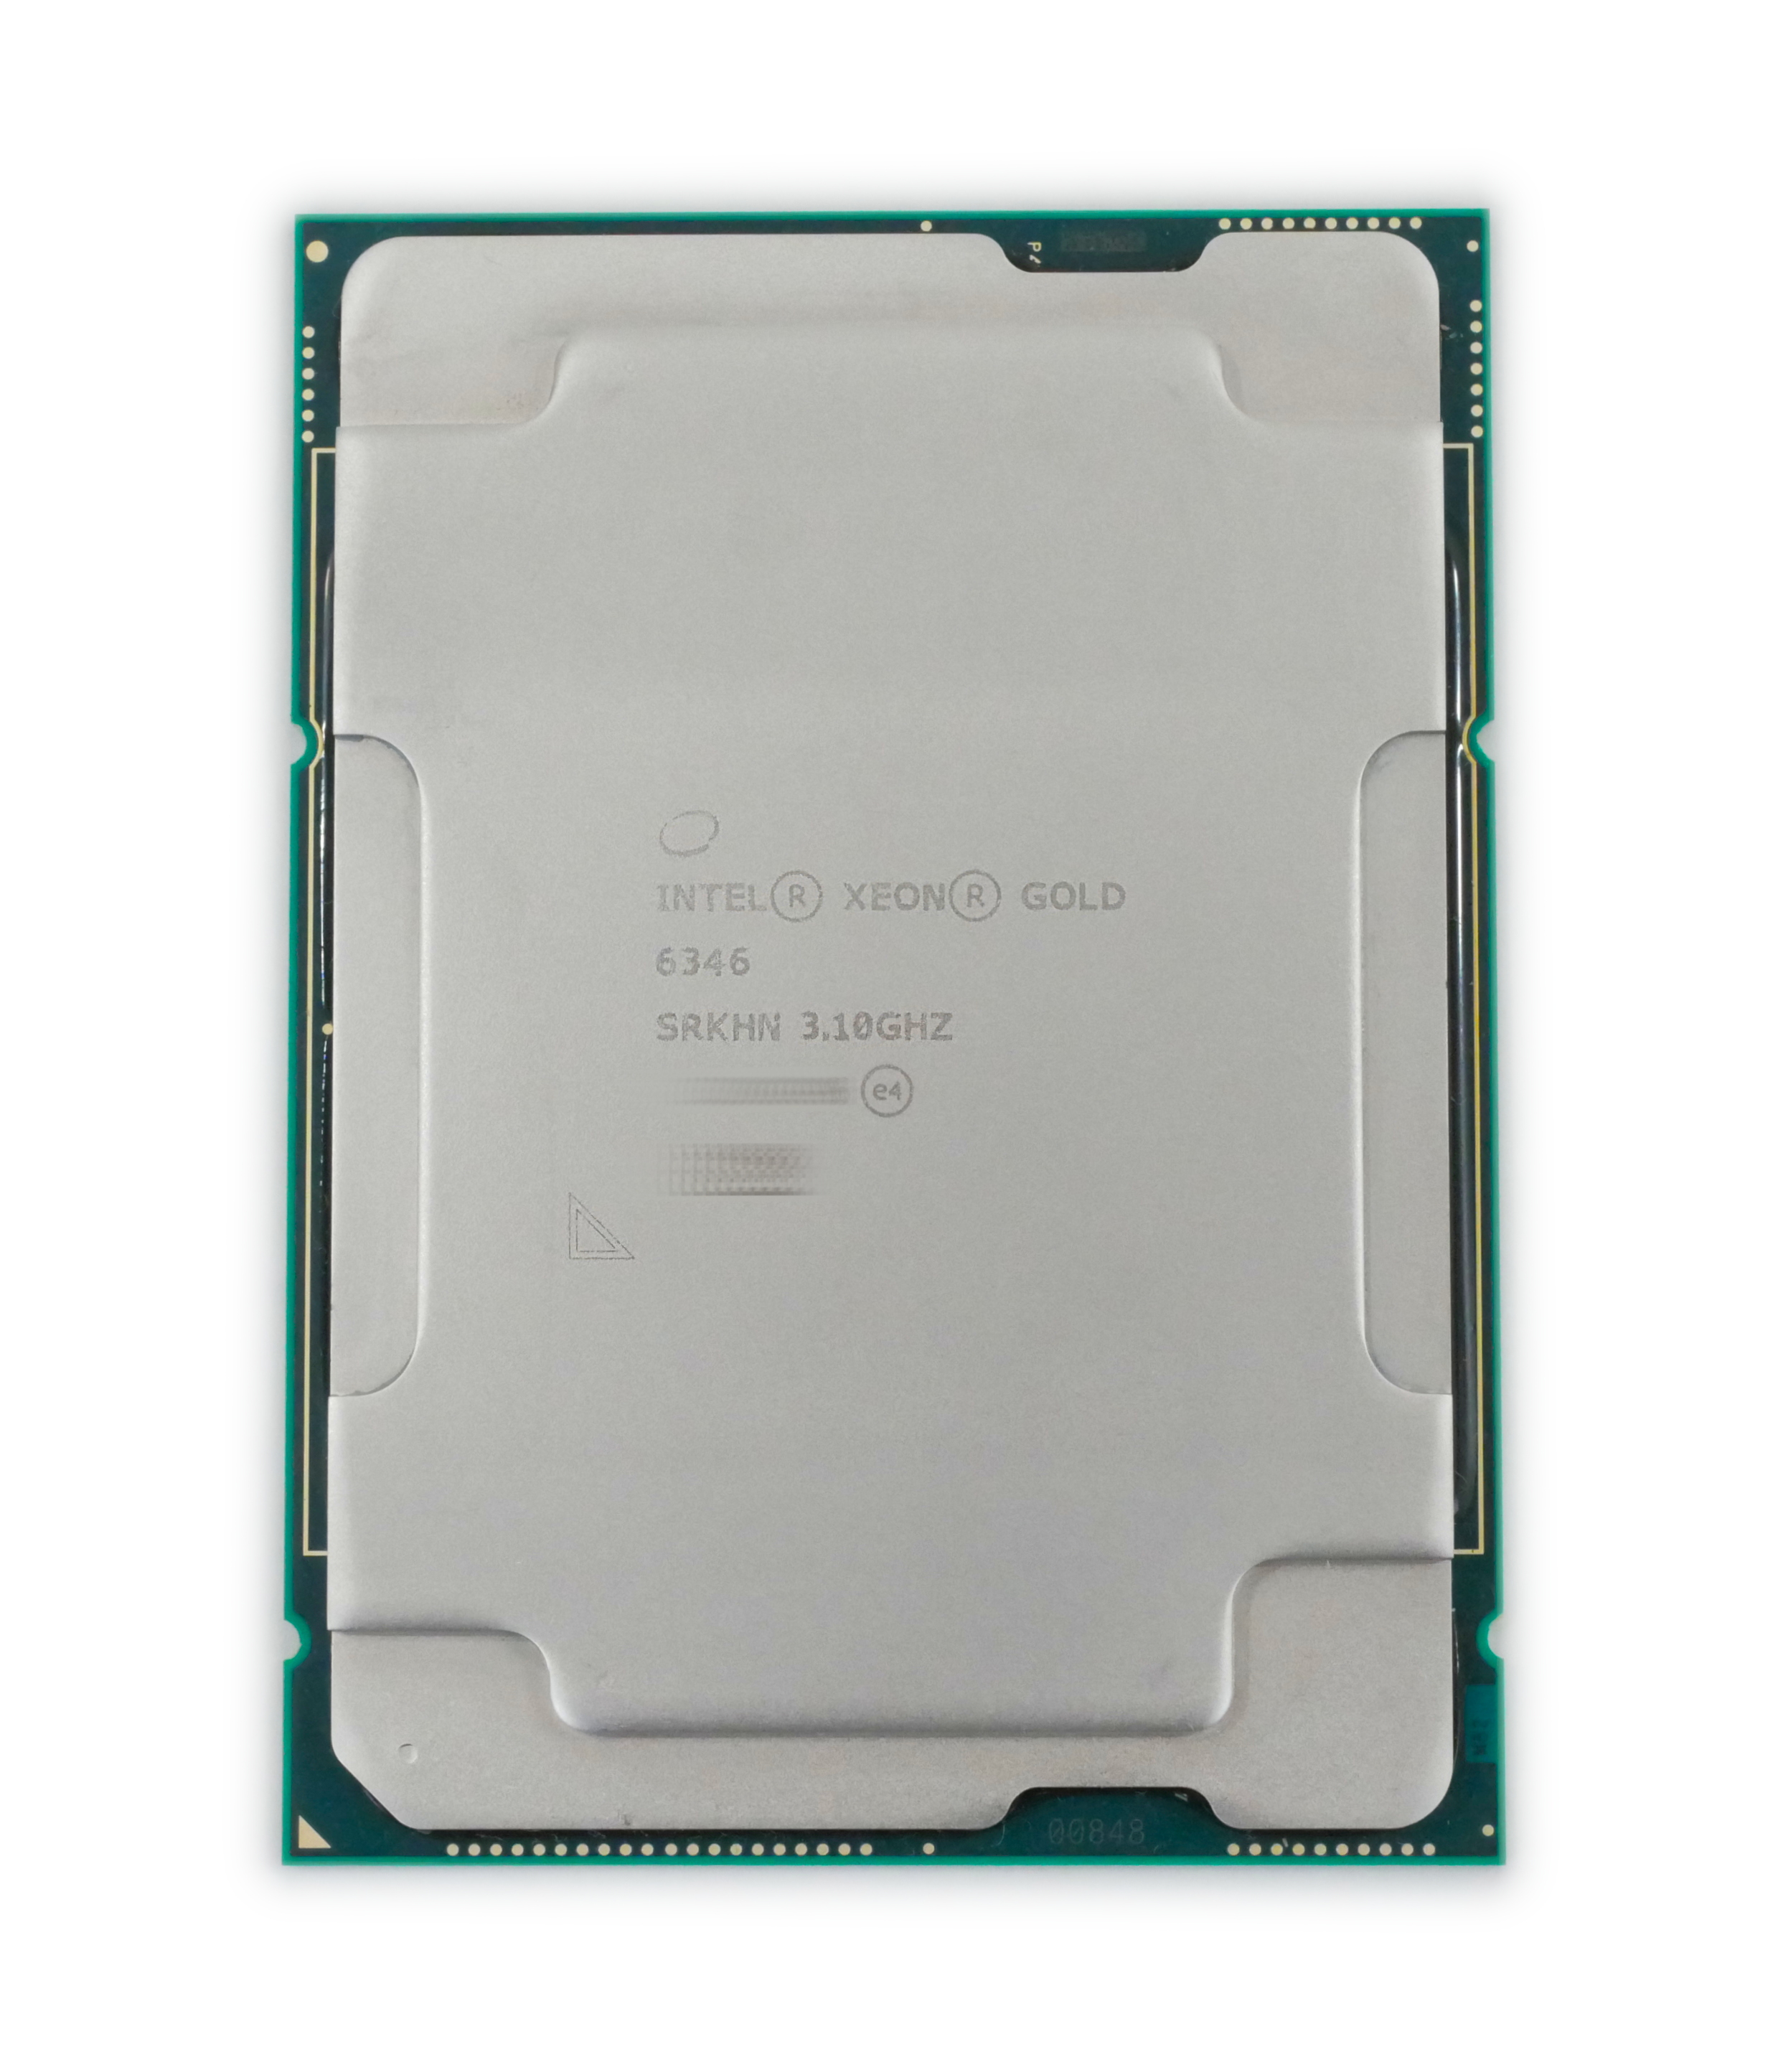 Intel Xeon Gold 6346 3.1GHz 16C 32T 36M Cache Sockets FCLGA4189 SRKHN